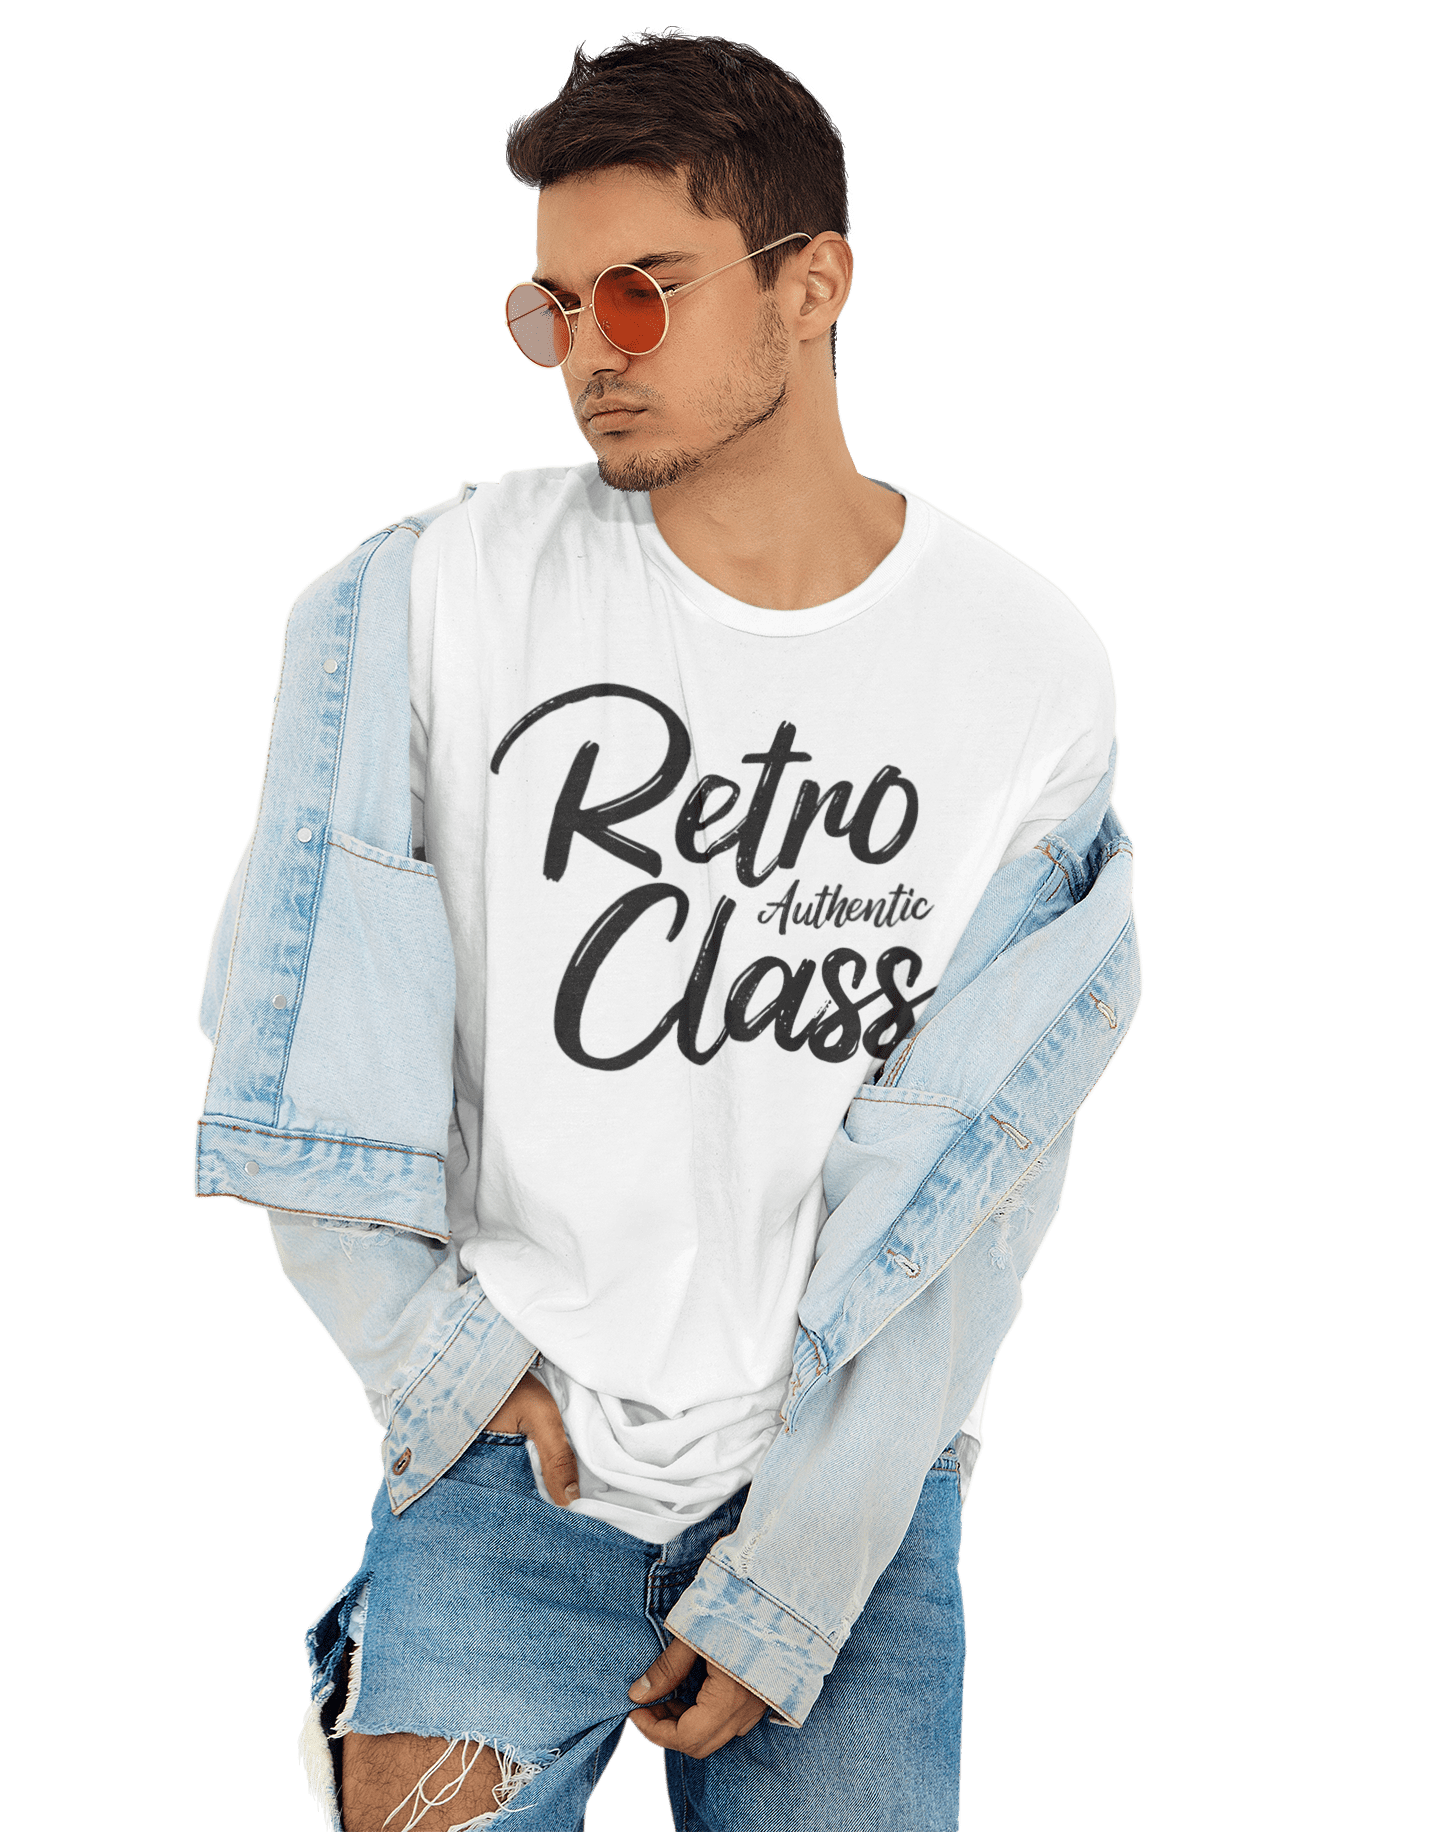 kaos retro class authentic